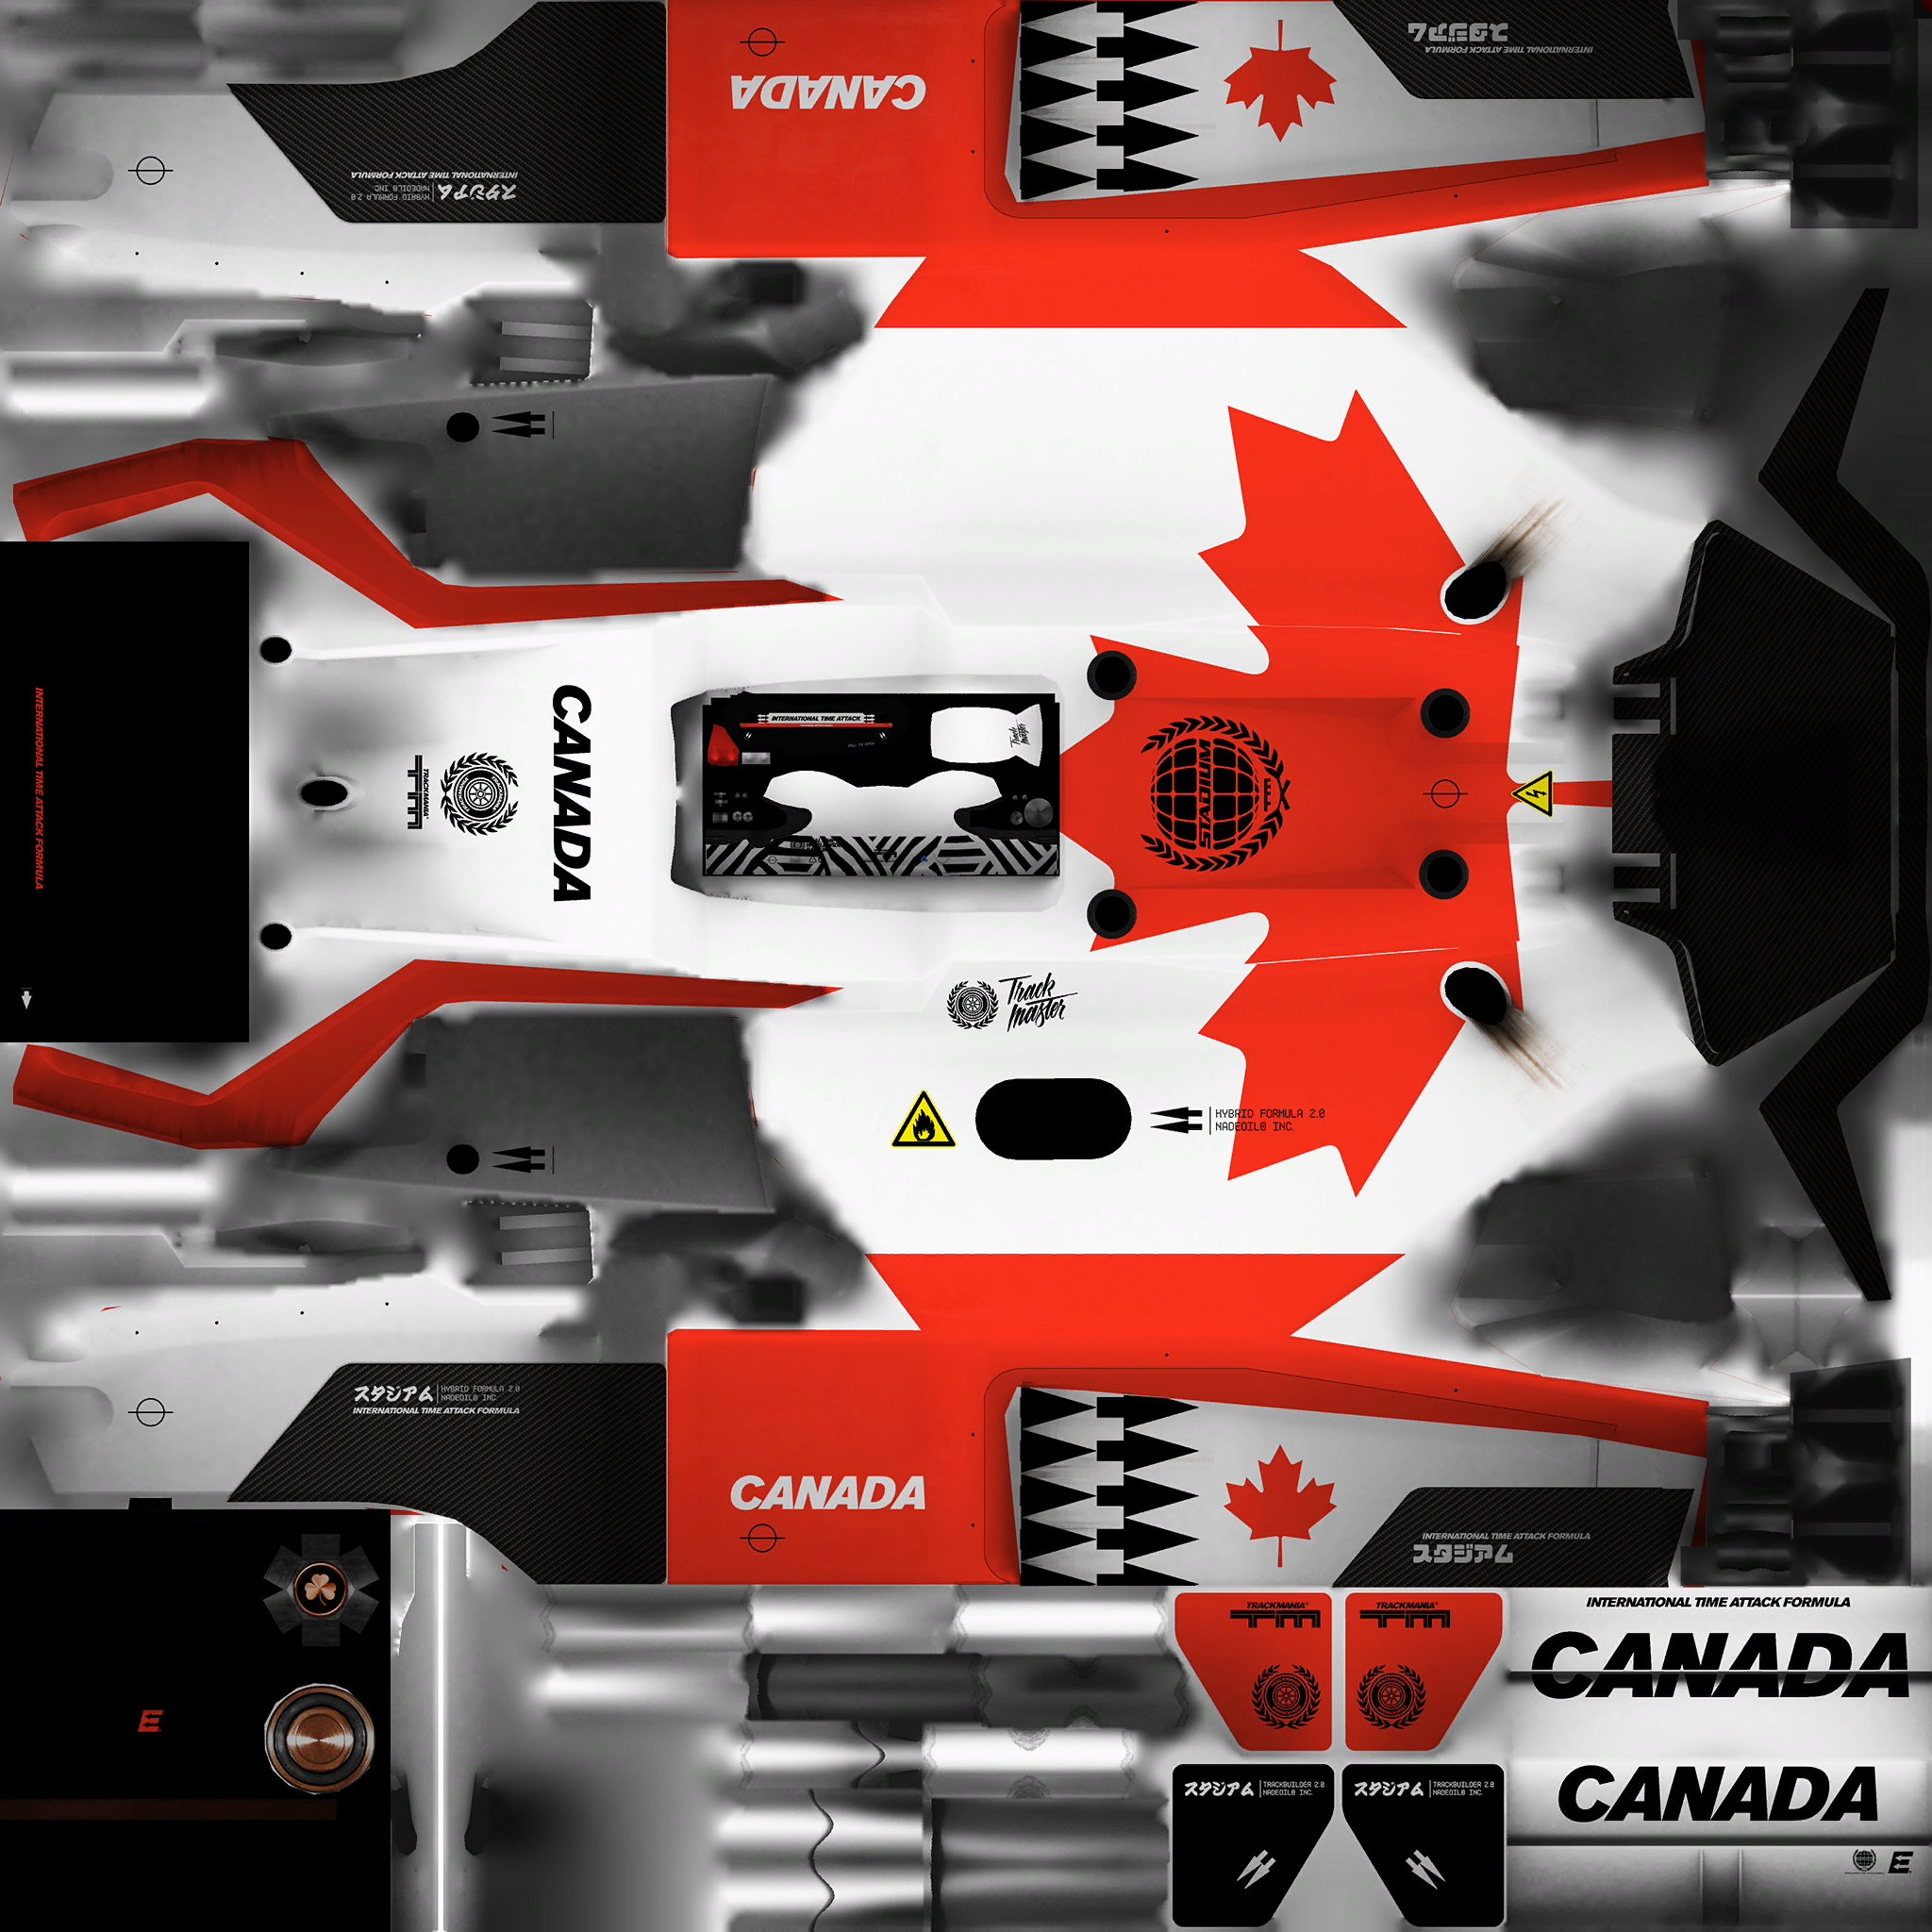 TrackMania Turbo - Arcade: Canada